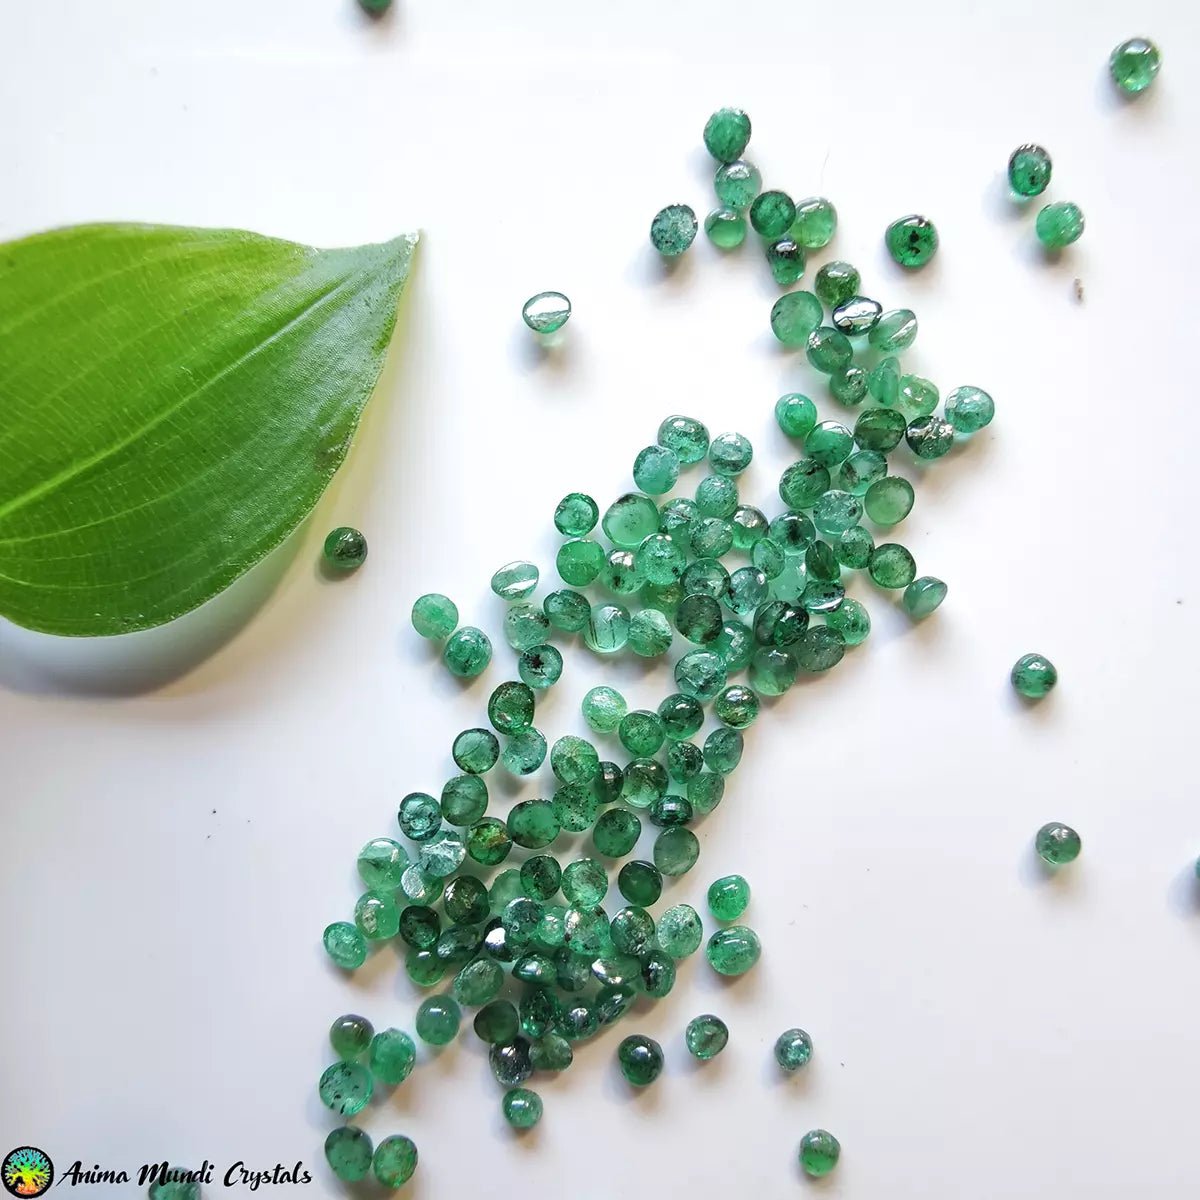 2.5mm Emerald Round Cabochons - 5pcs - Anima Mundi Crystals